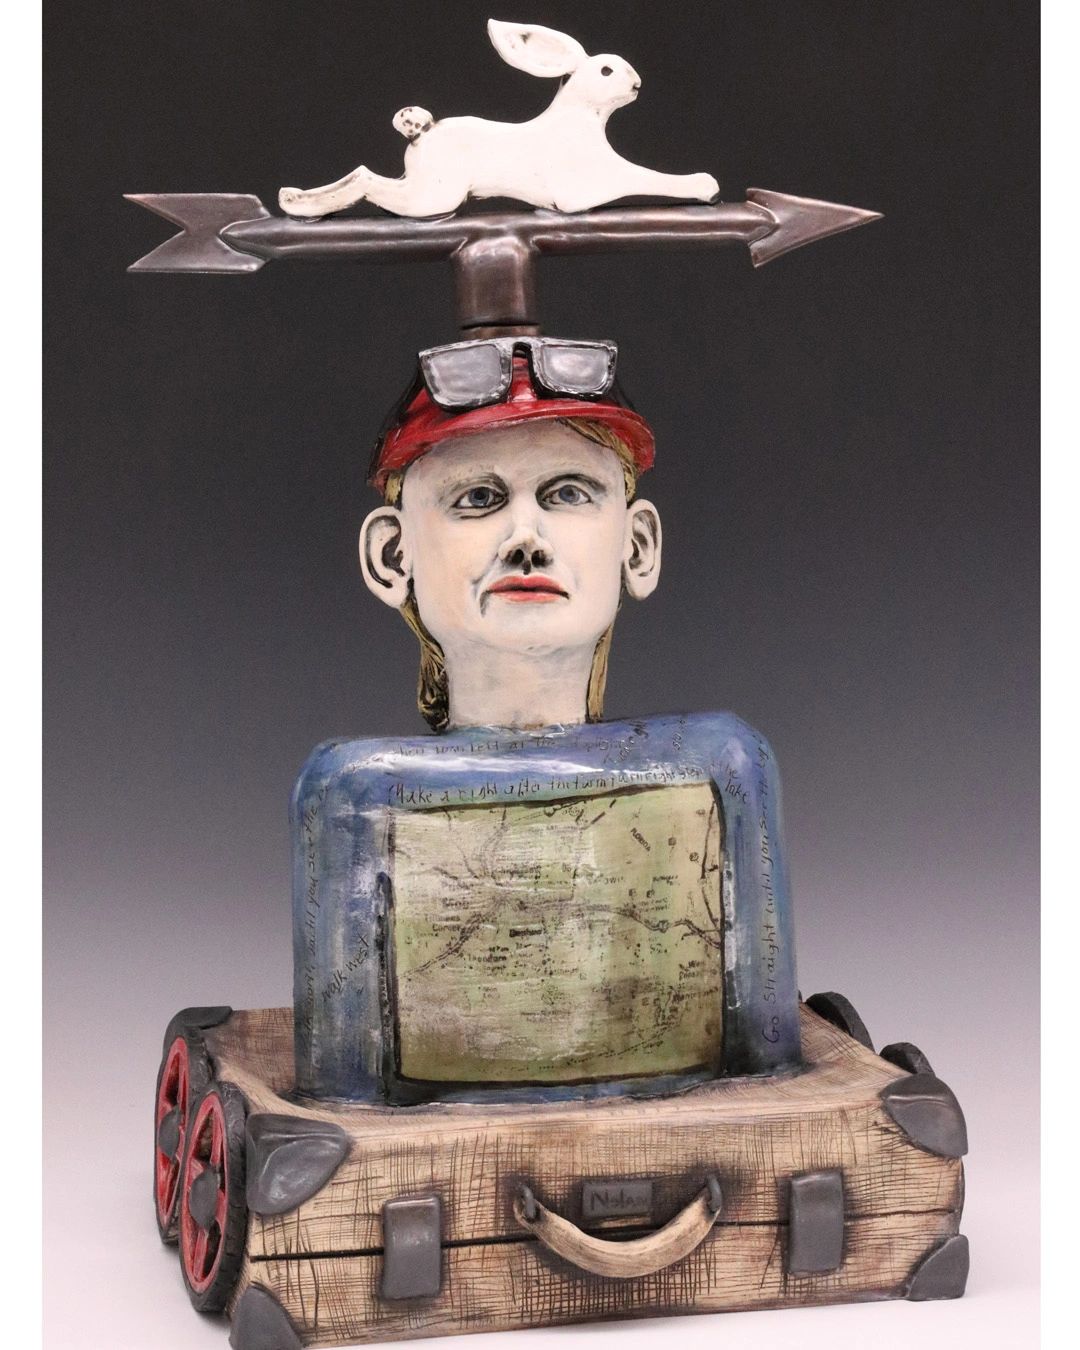 Ceramic sculpture of a Traveler with weathervane